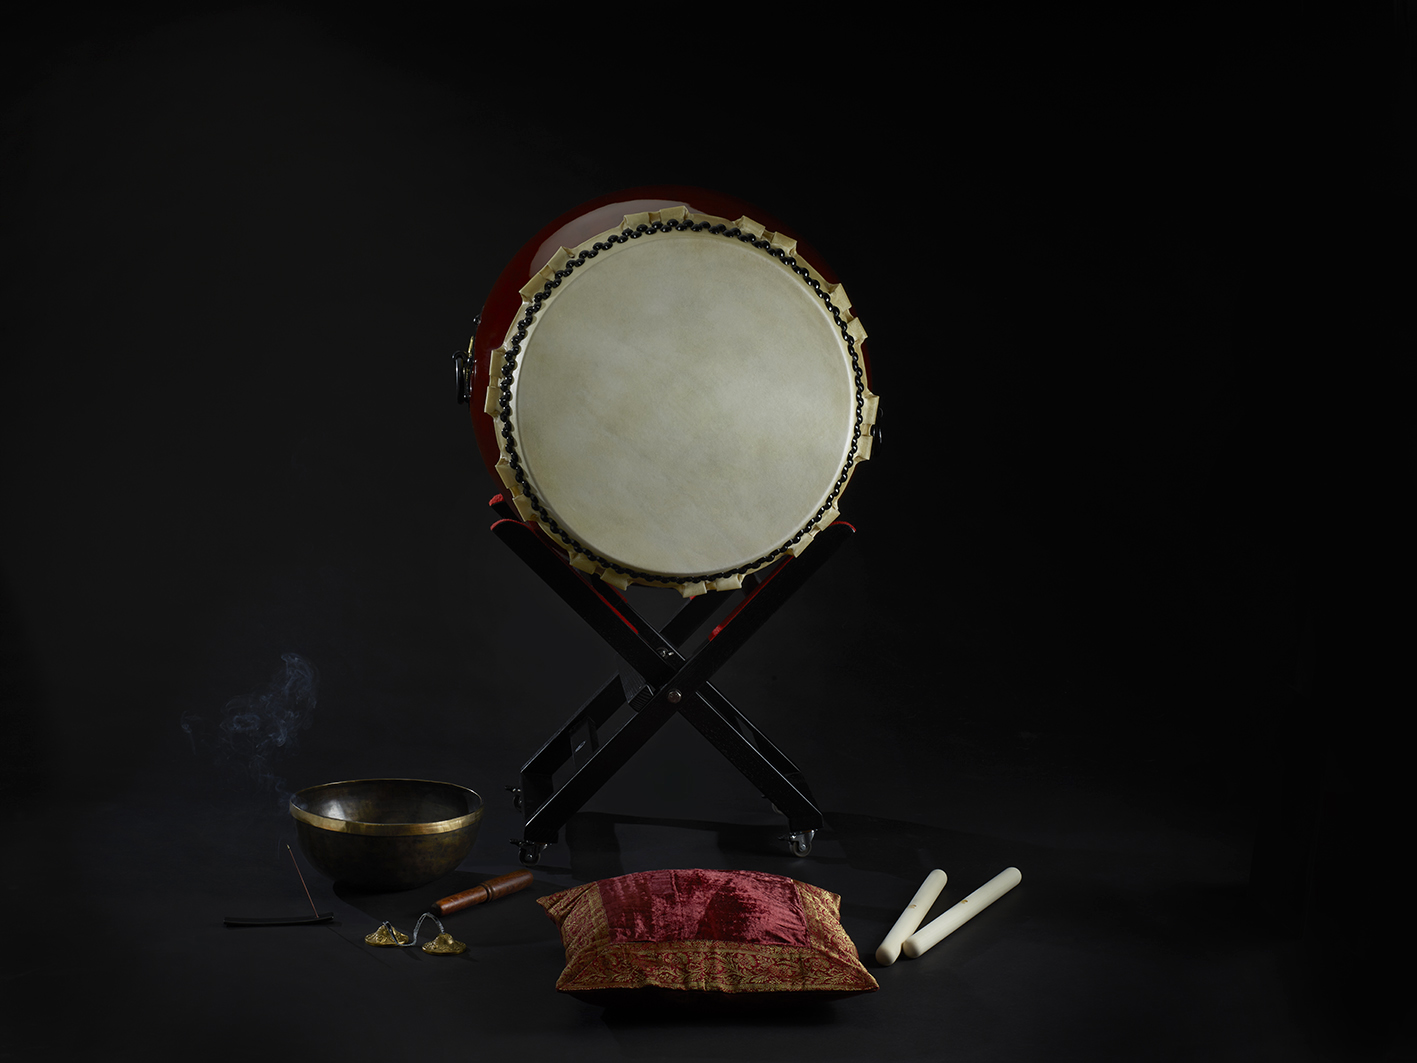 Miya-Daiko hq drum 48cm/h:60cm with Zen X-stand low (995 / 245)